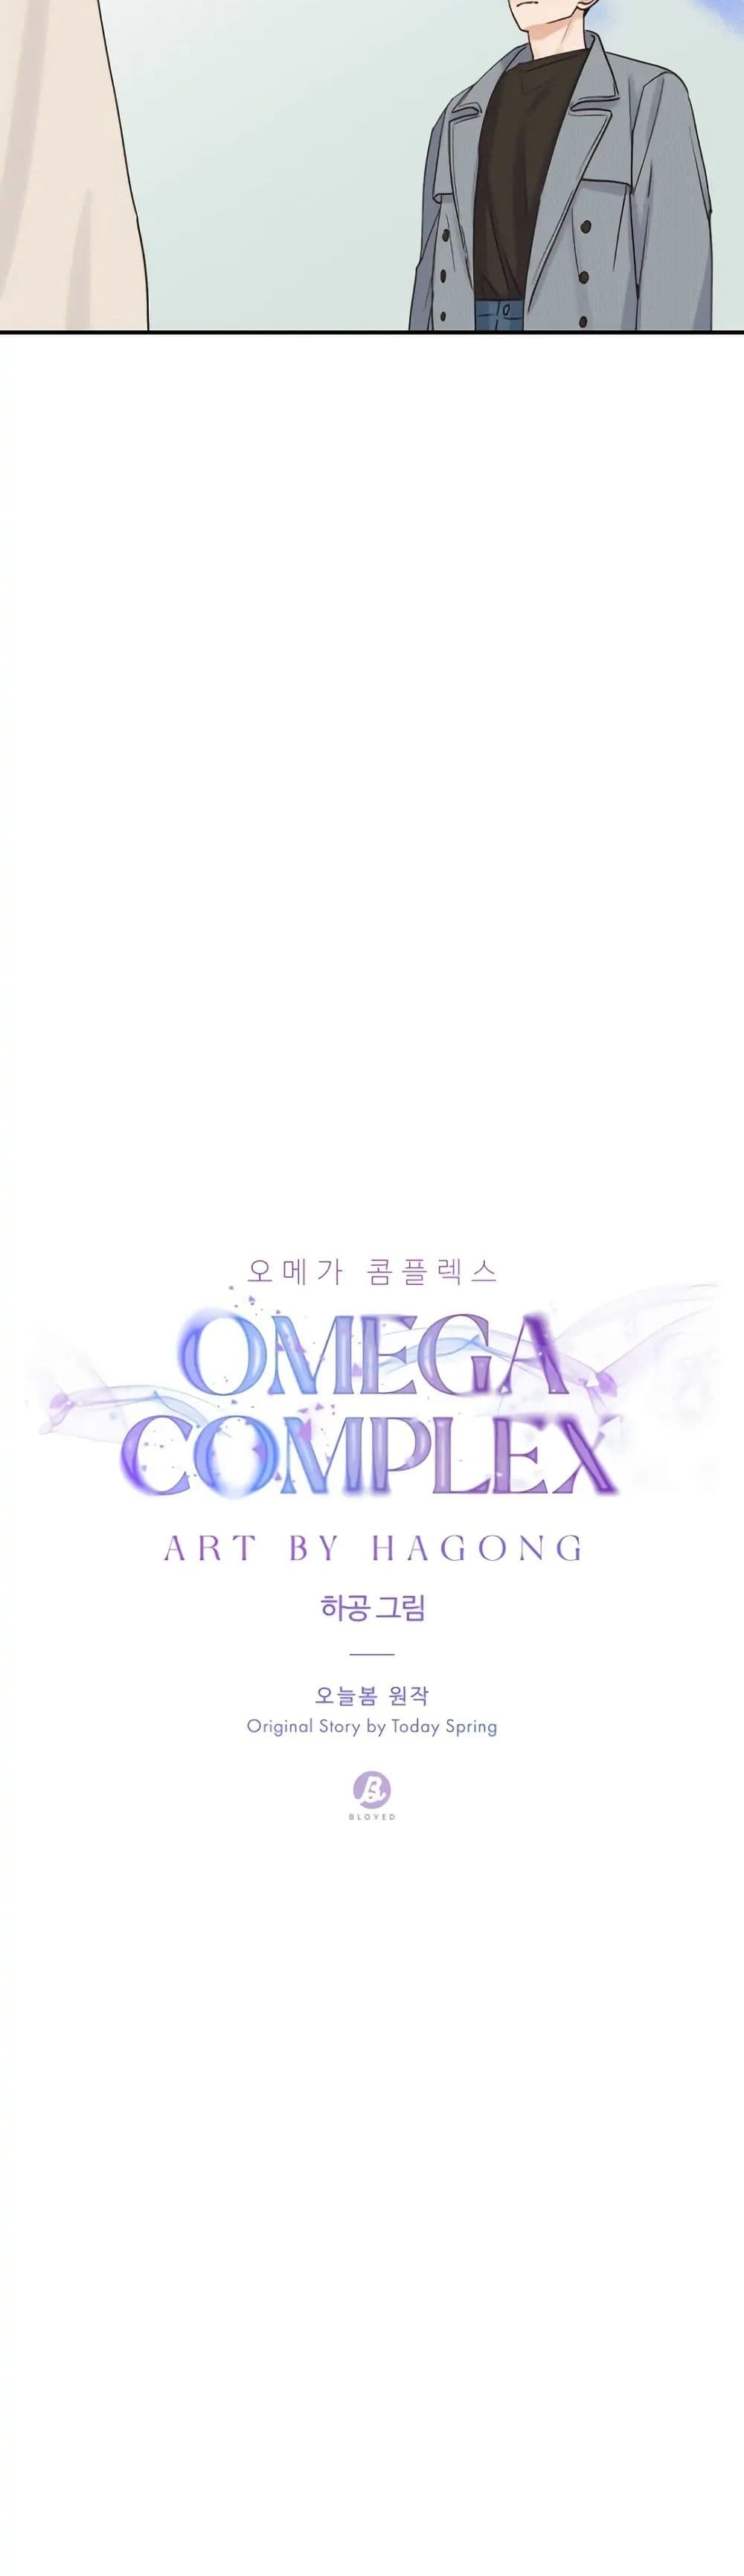 Omega Complex 16-16